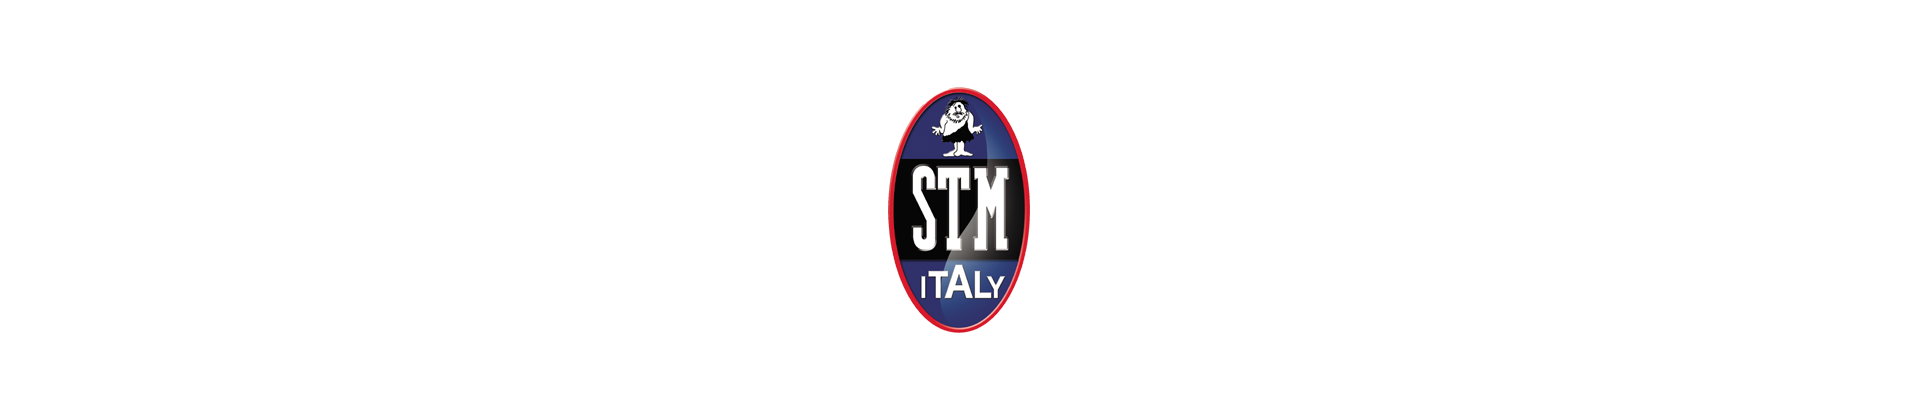 STM ITALY